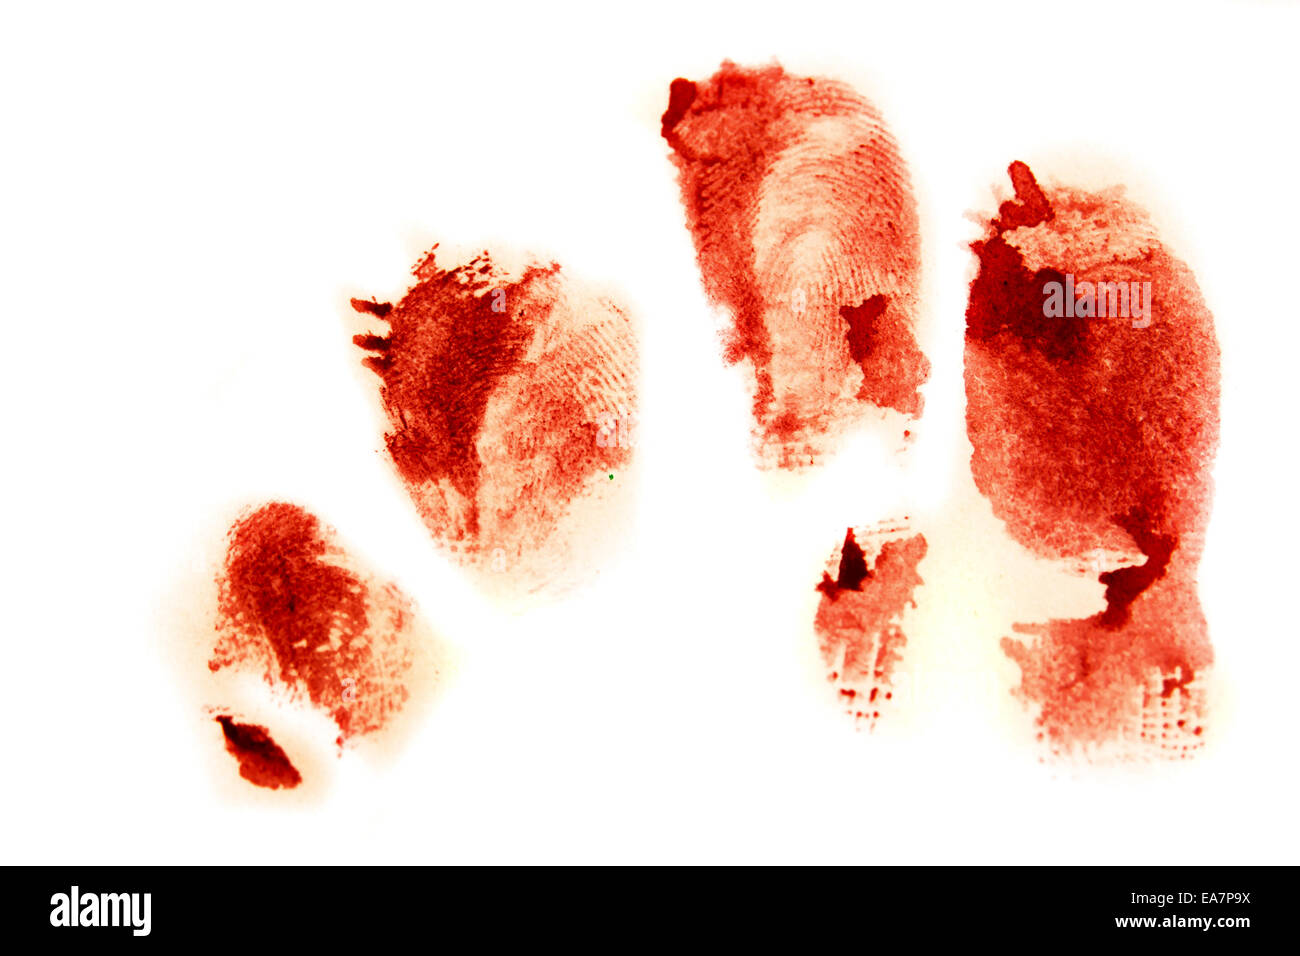 Blood thumbprint finger print isolated on white background Stock Photo